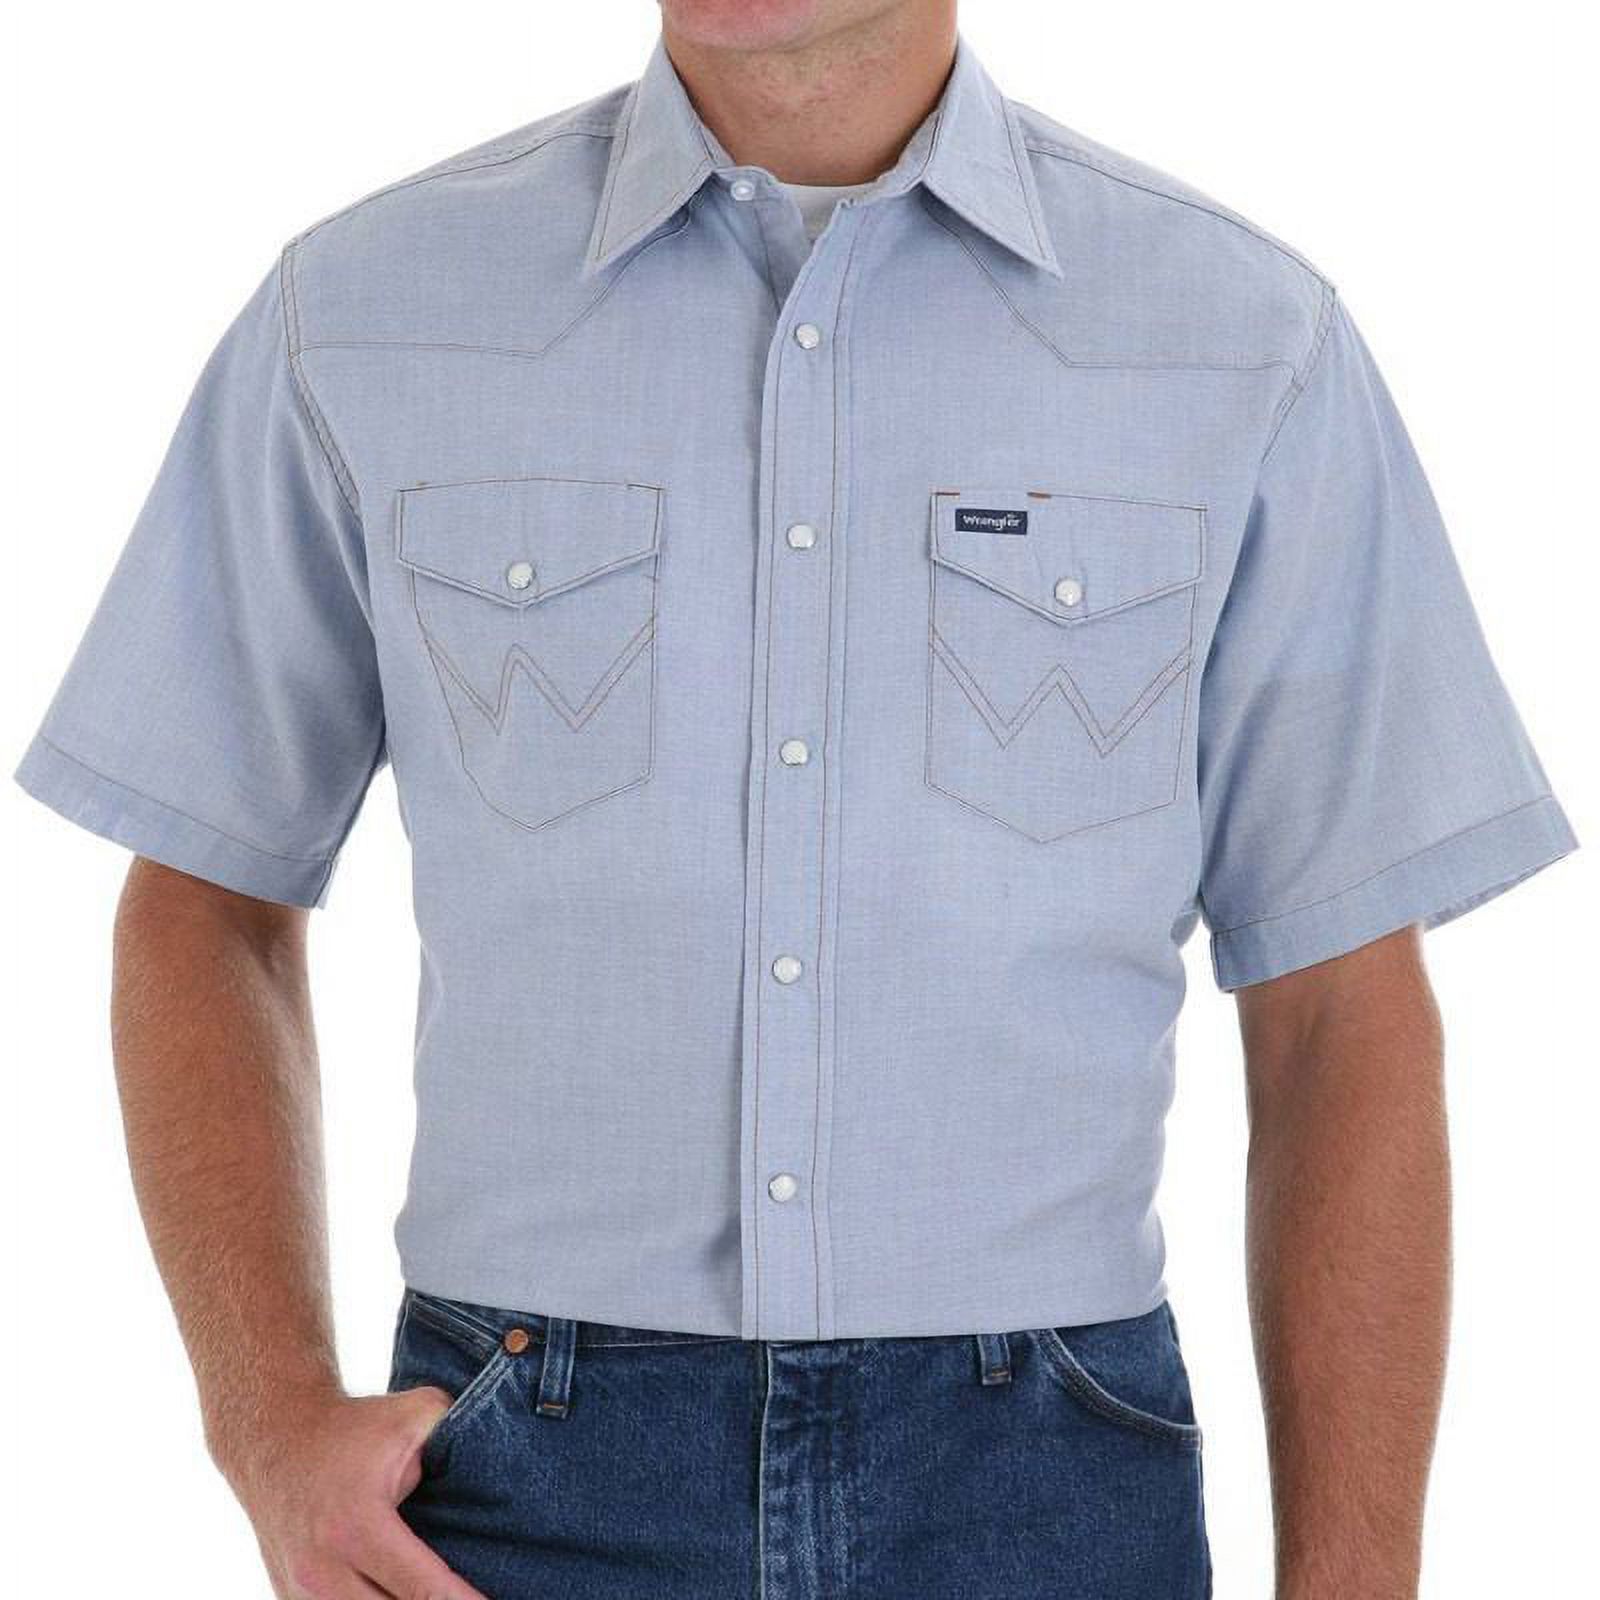 Wrangler Chambray Short Sleeve Work - Mens Shirt  - 1070131Mw - image 1 of 4